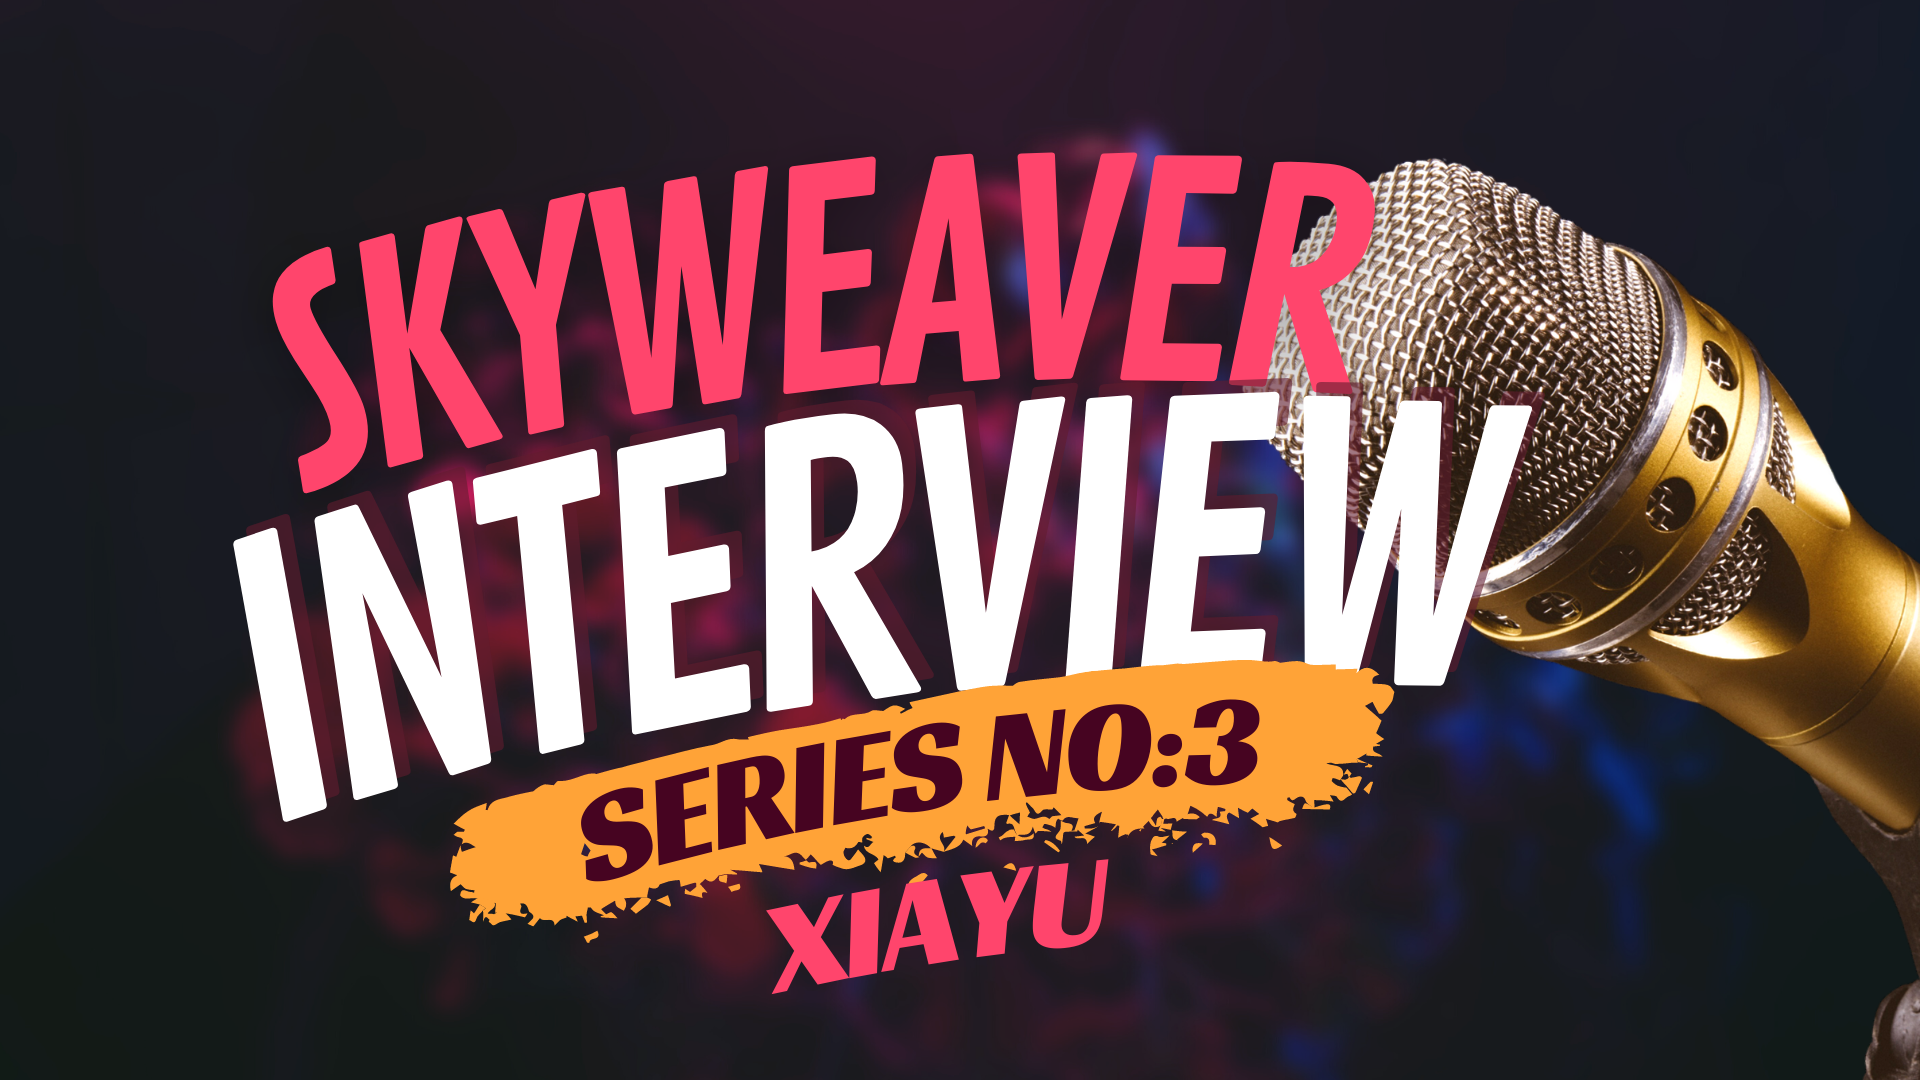 Skyweaver interview XiaYu